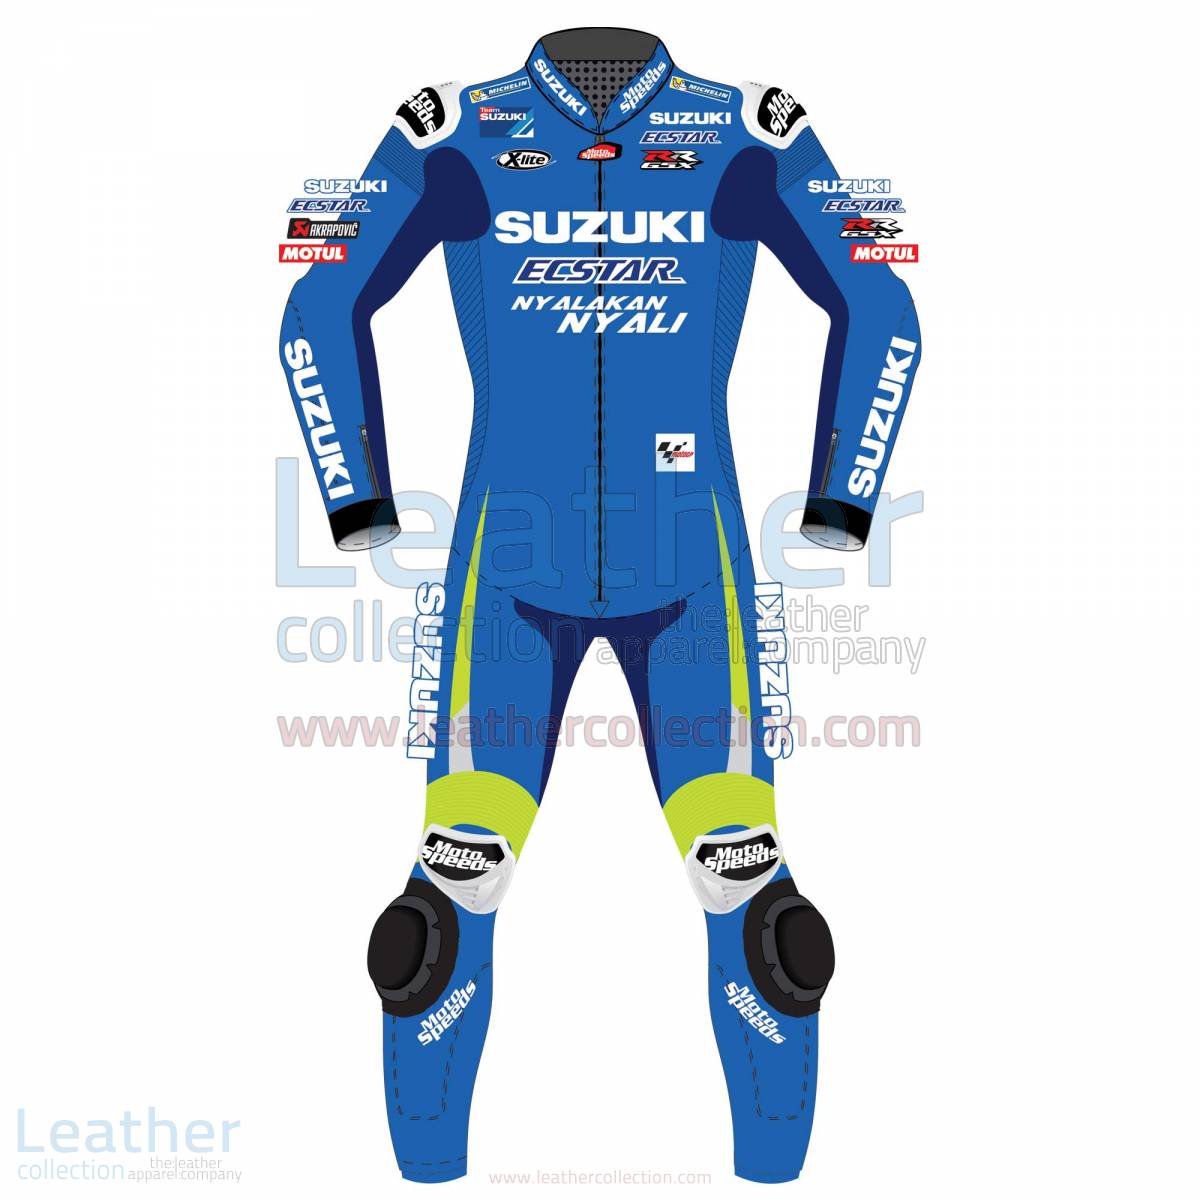 Suzuki racing suit